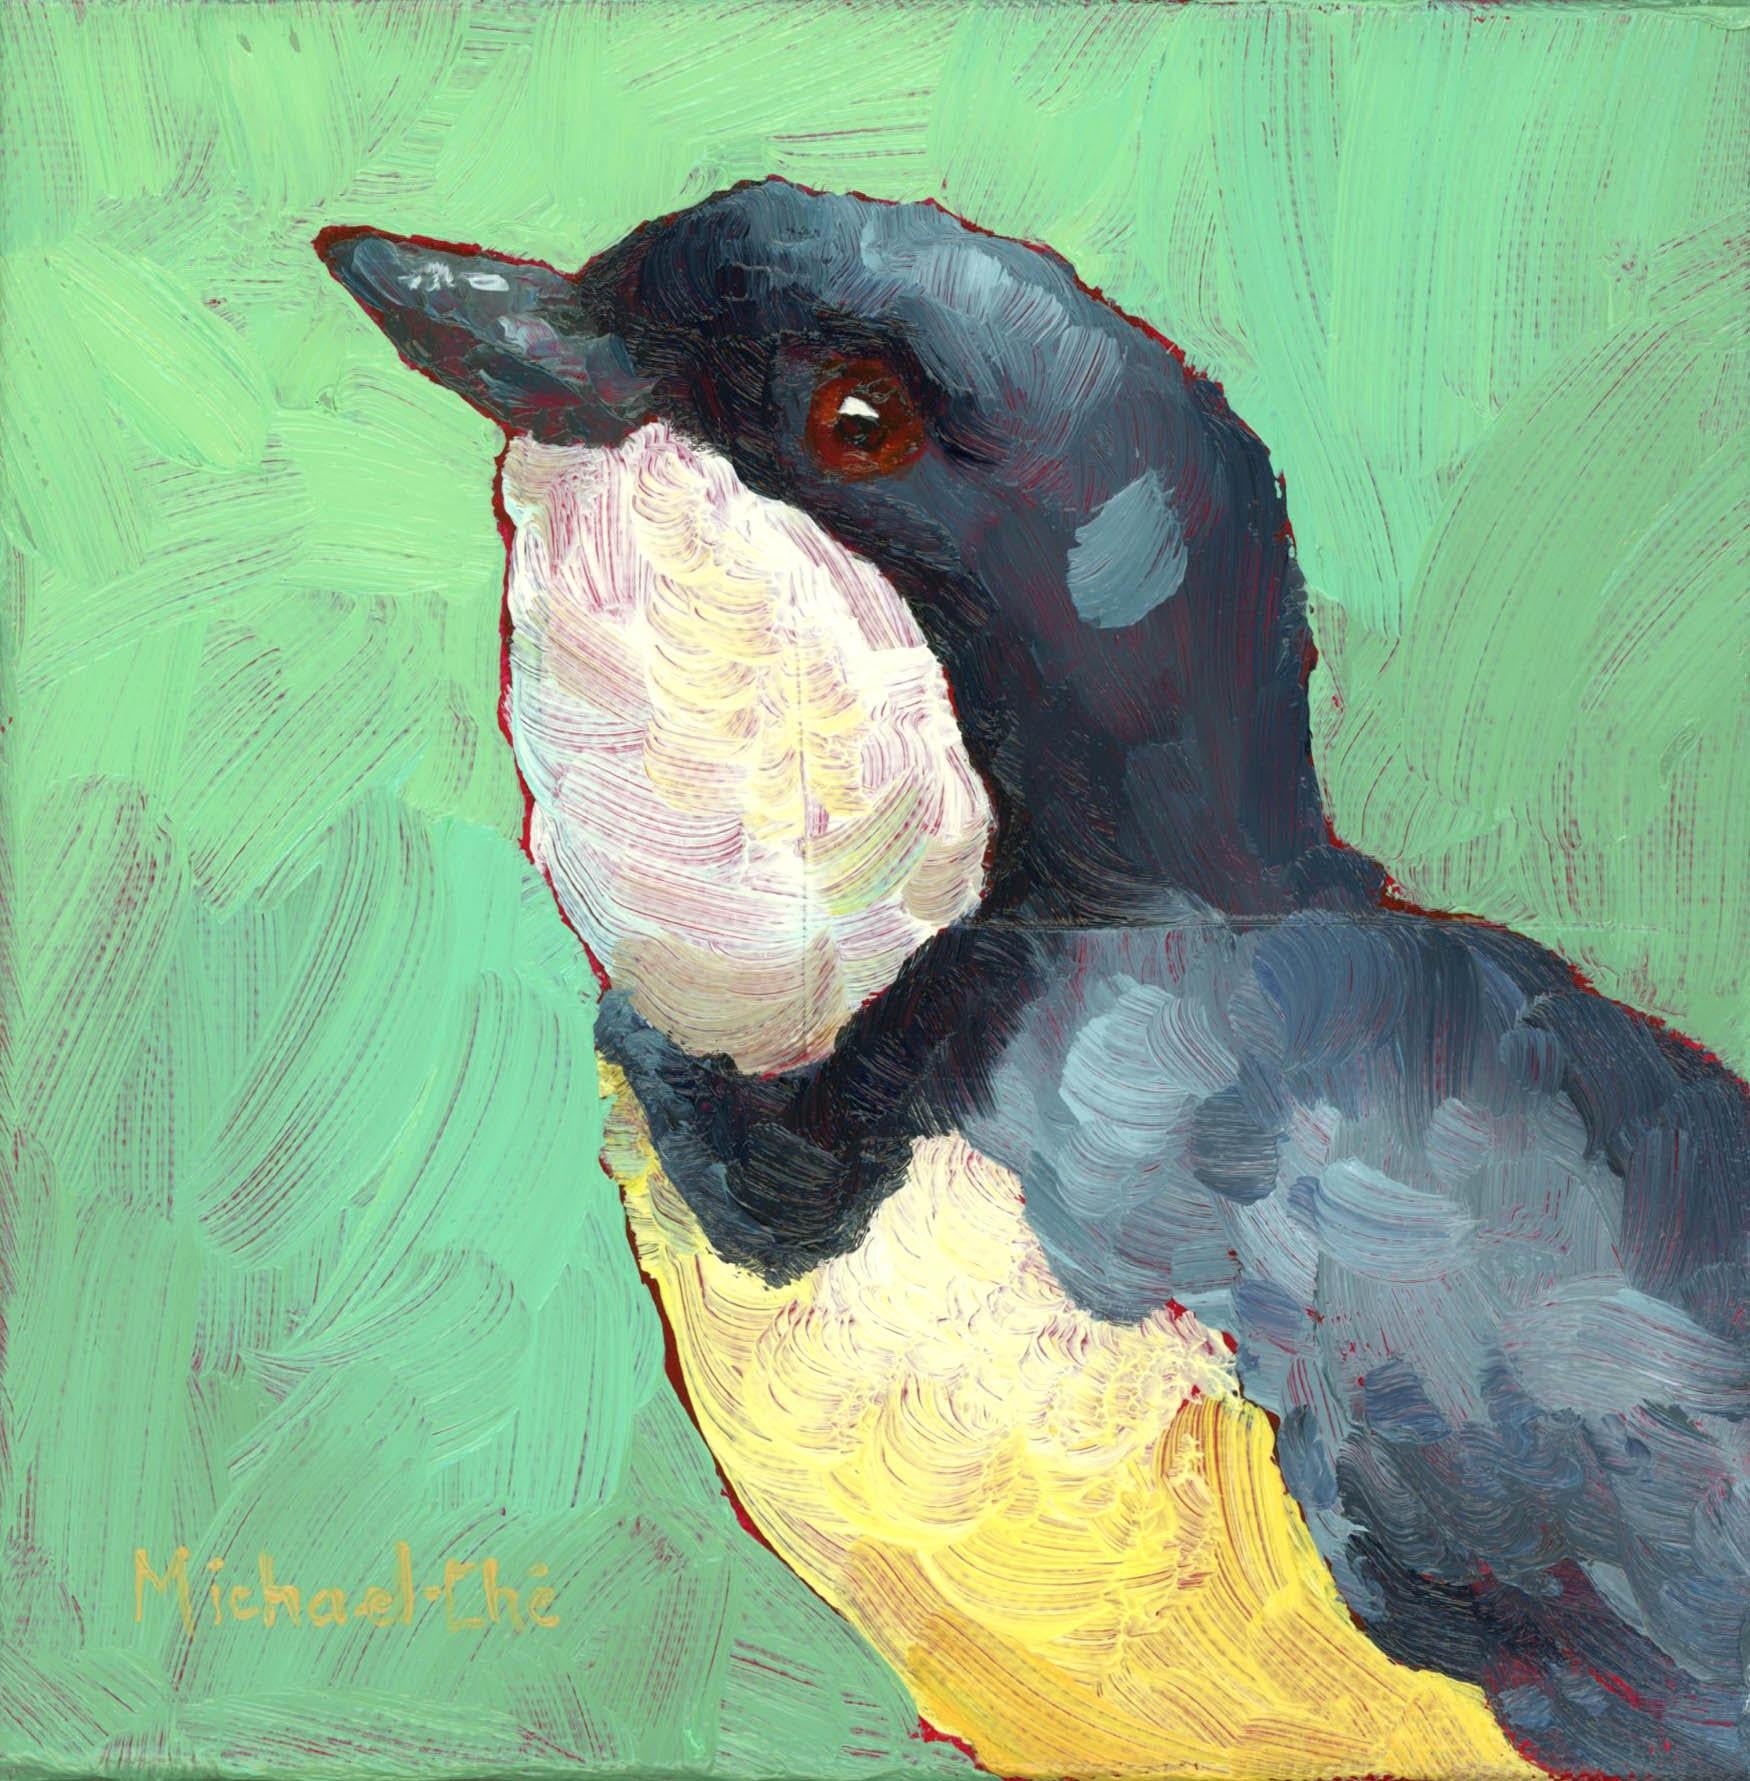 Michael-Che Swisher Animal Painting - "Working on My Swing" Impasto oil painting of grey, white, yellow bird on green